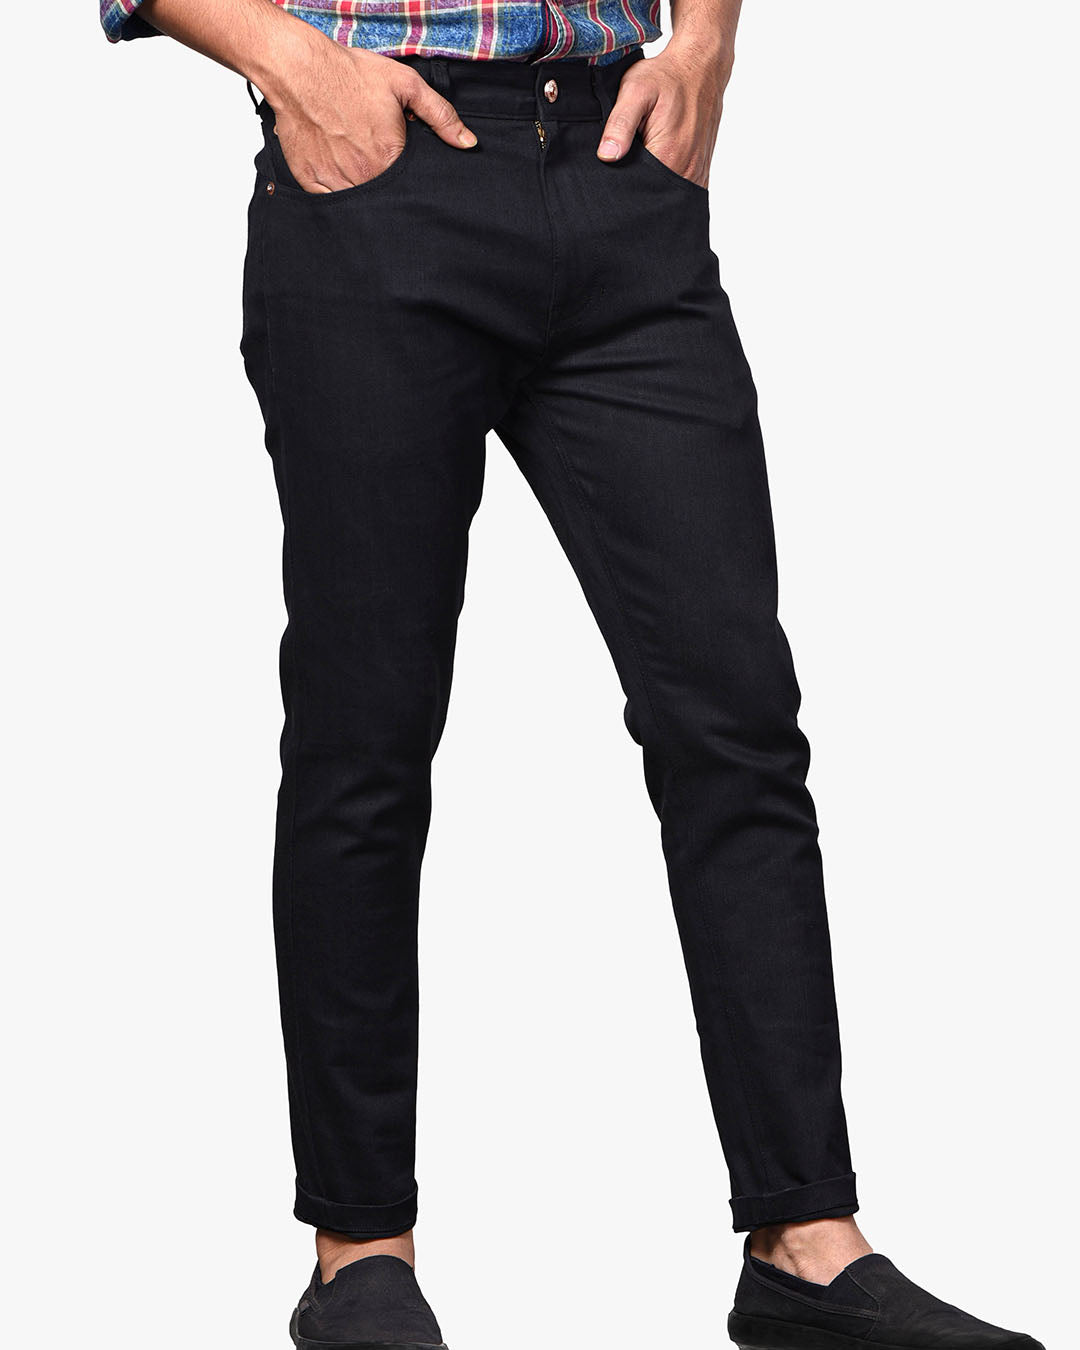 Model wearing stretch jeans for men by Luxire in black